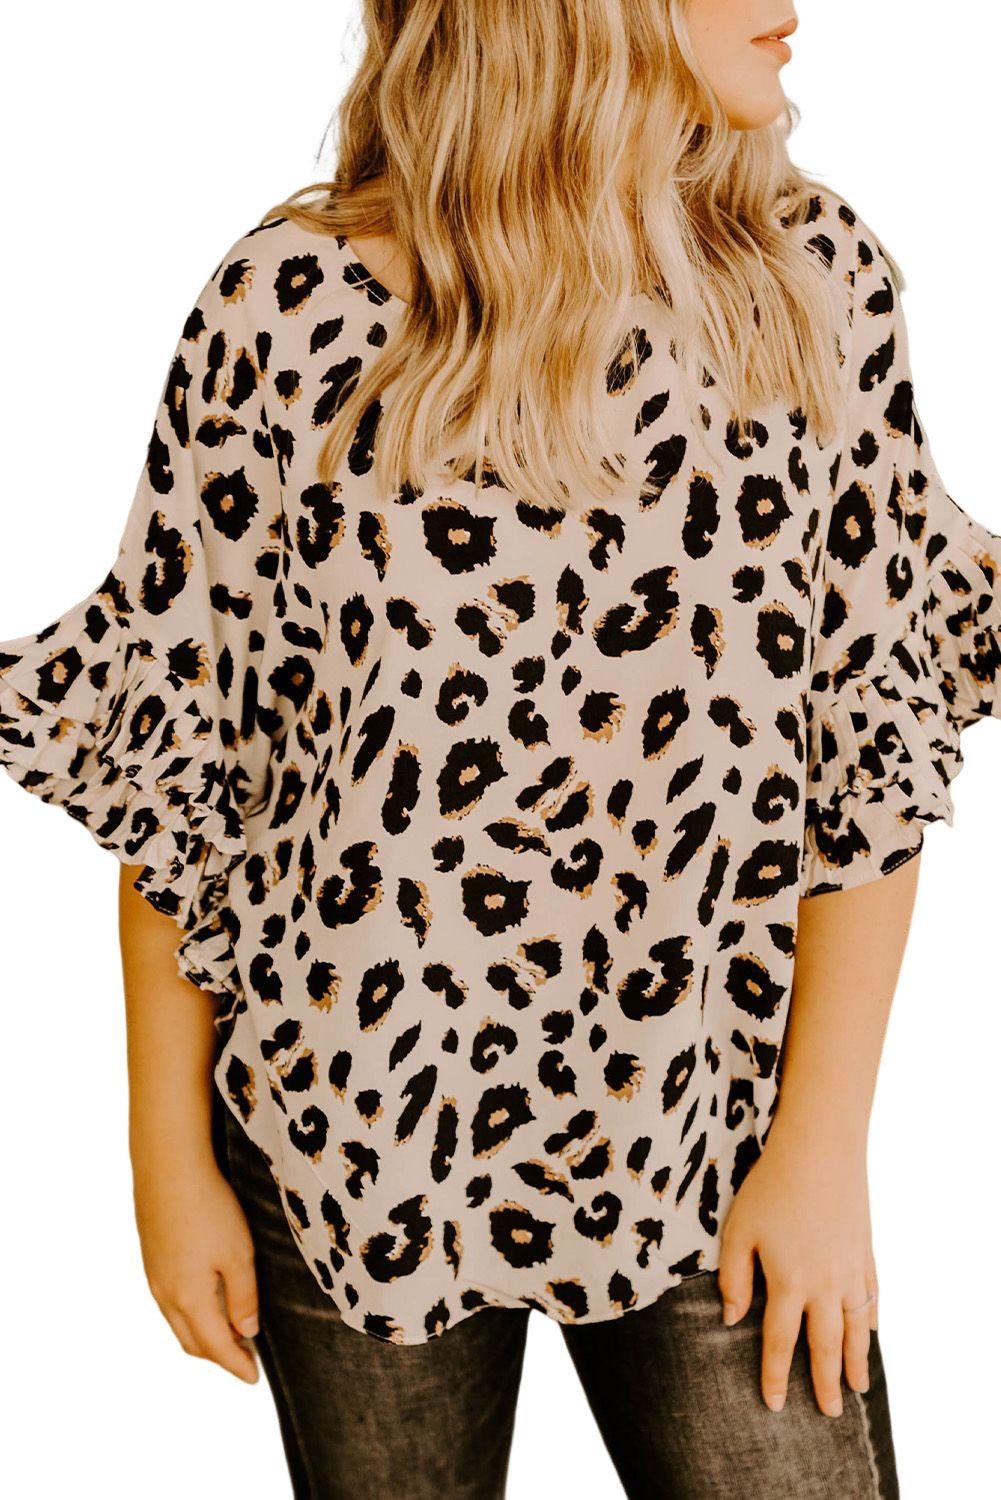 Leopard Print Ruffle Trim Batwing Sleeve Blouse - L & M Kee, LLC